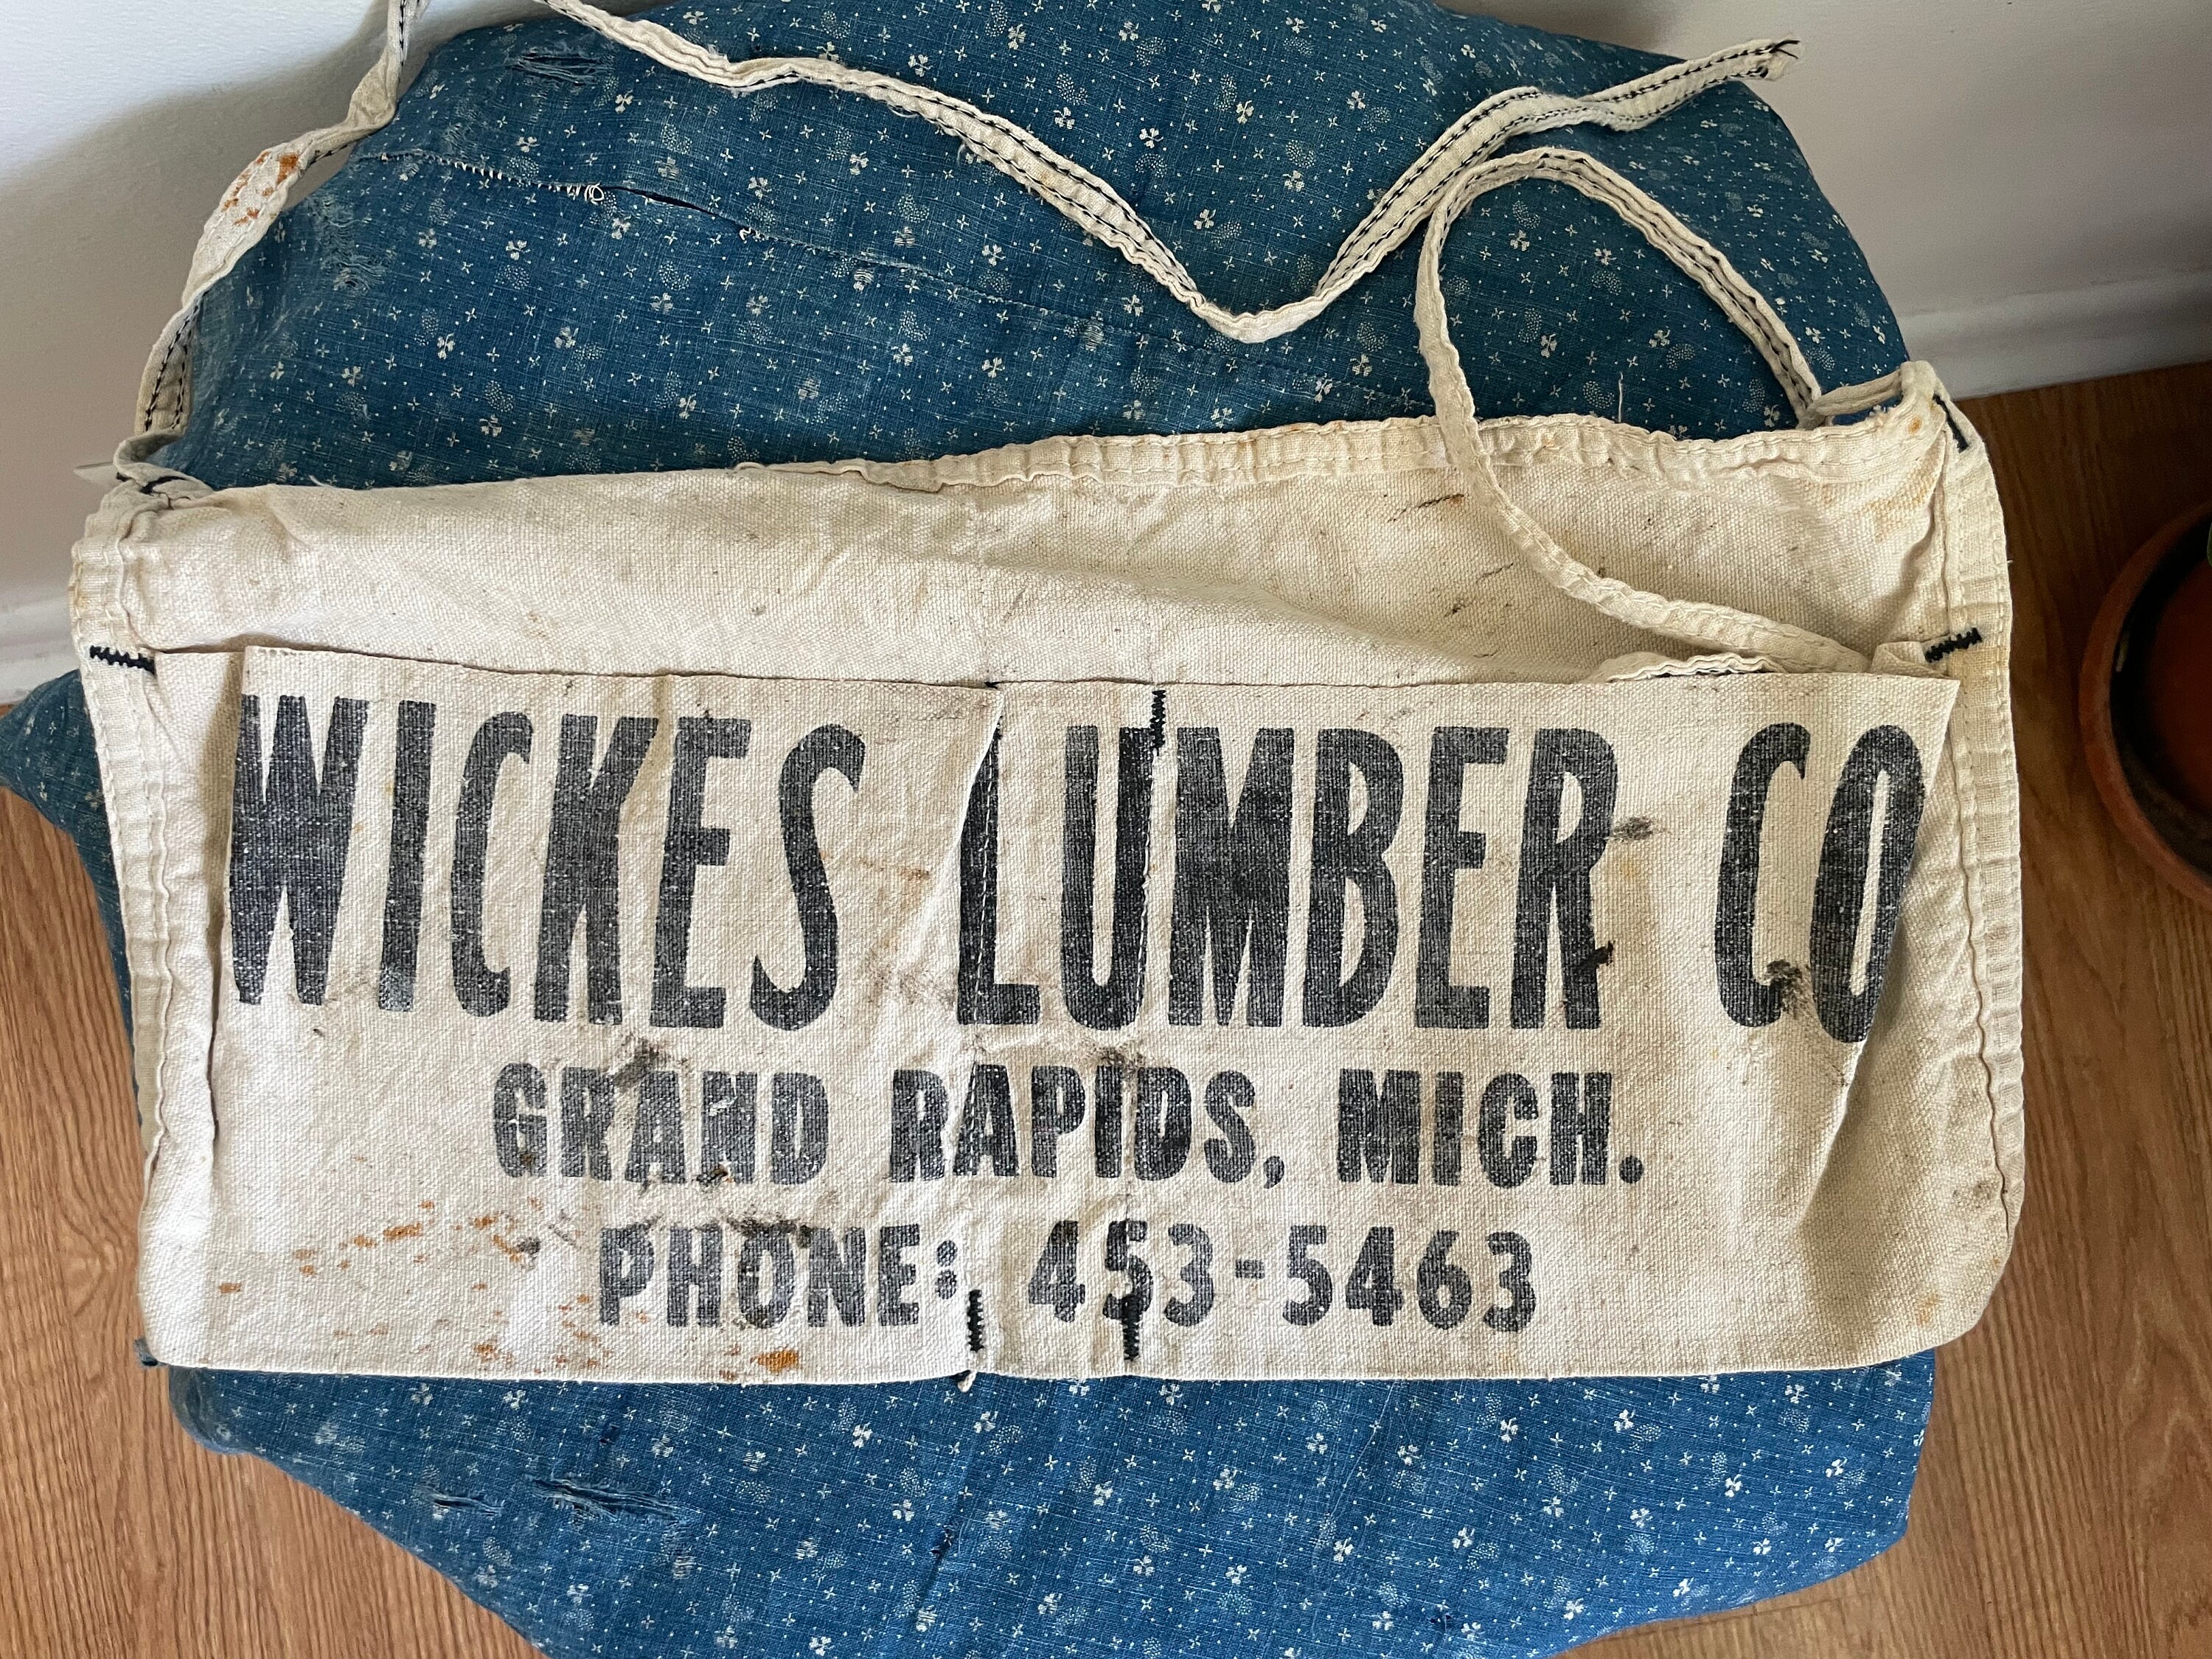 Vintage Homestead Supply Advertisement Nail Apron Big Bear Ca